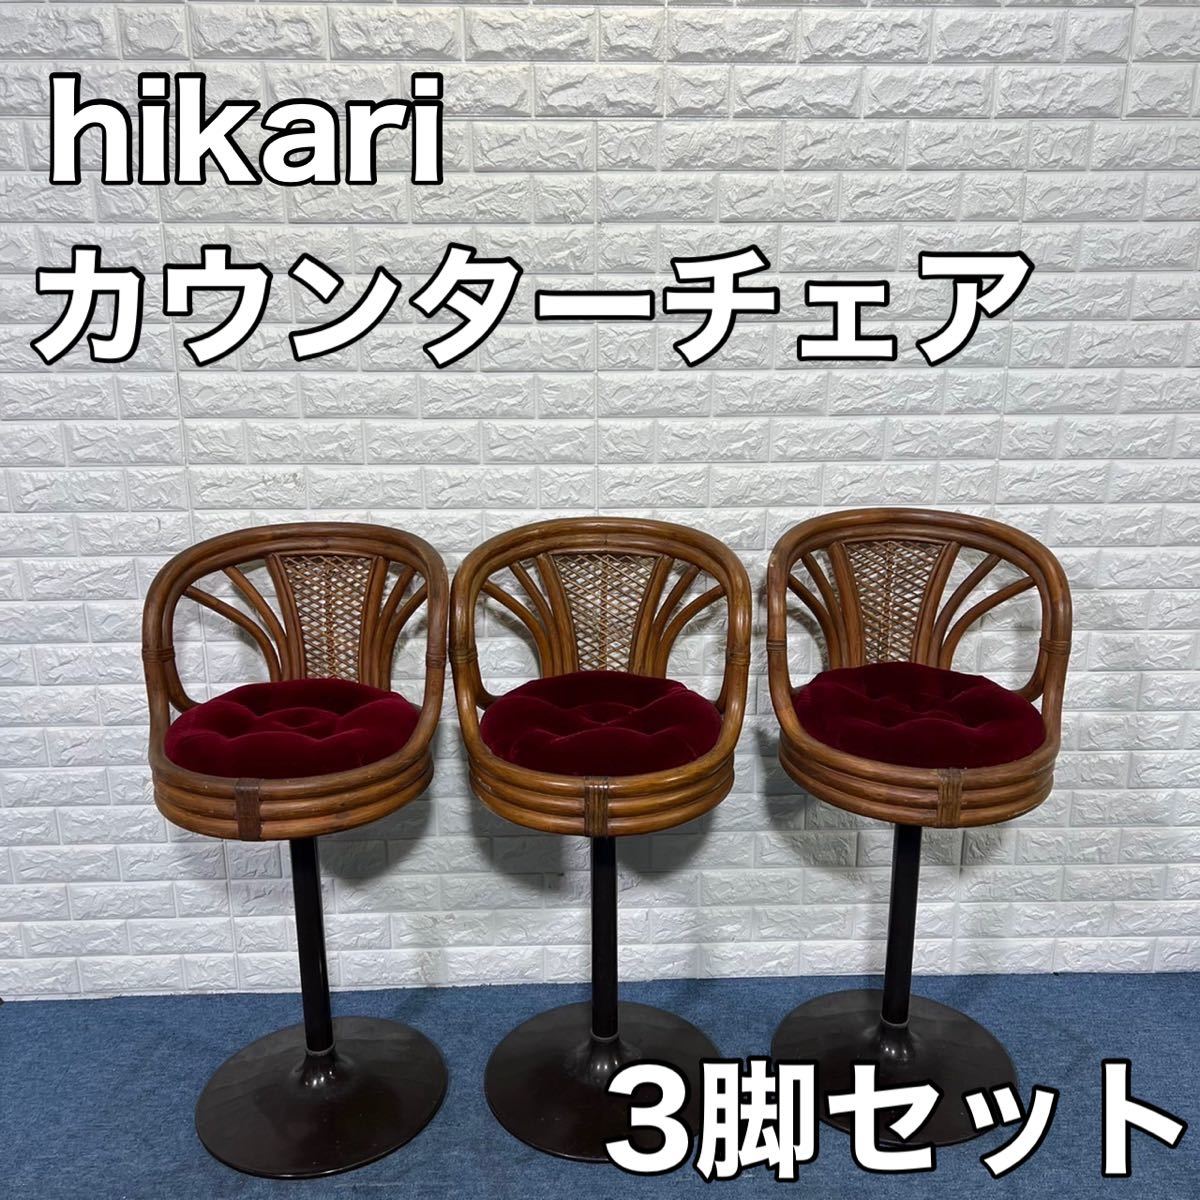 hikari 光製作所 カウンターチェア 3脚セット ハイチェア 椅子 木製 家具 インテリア